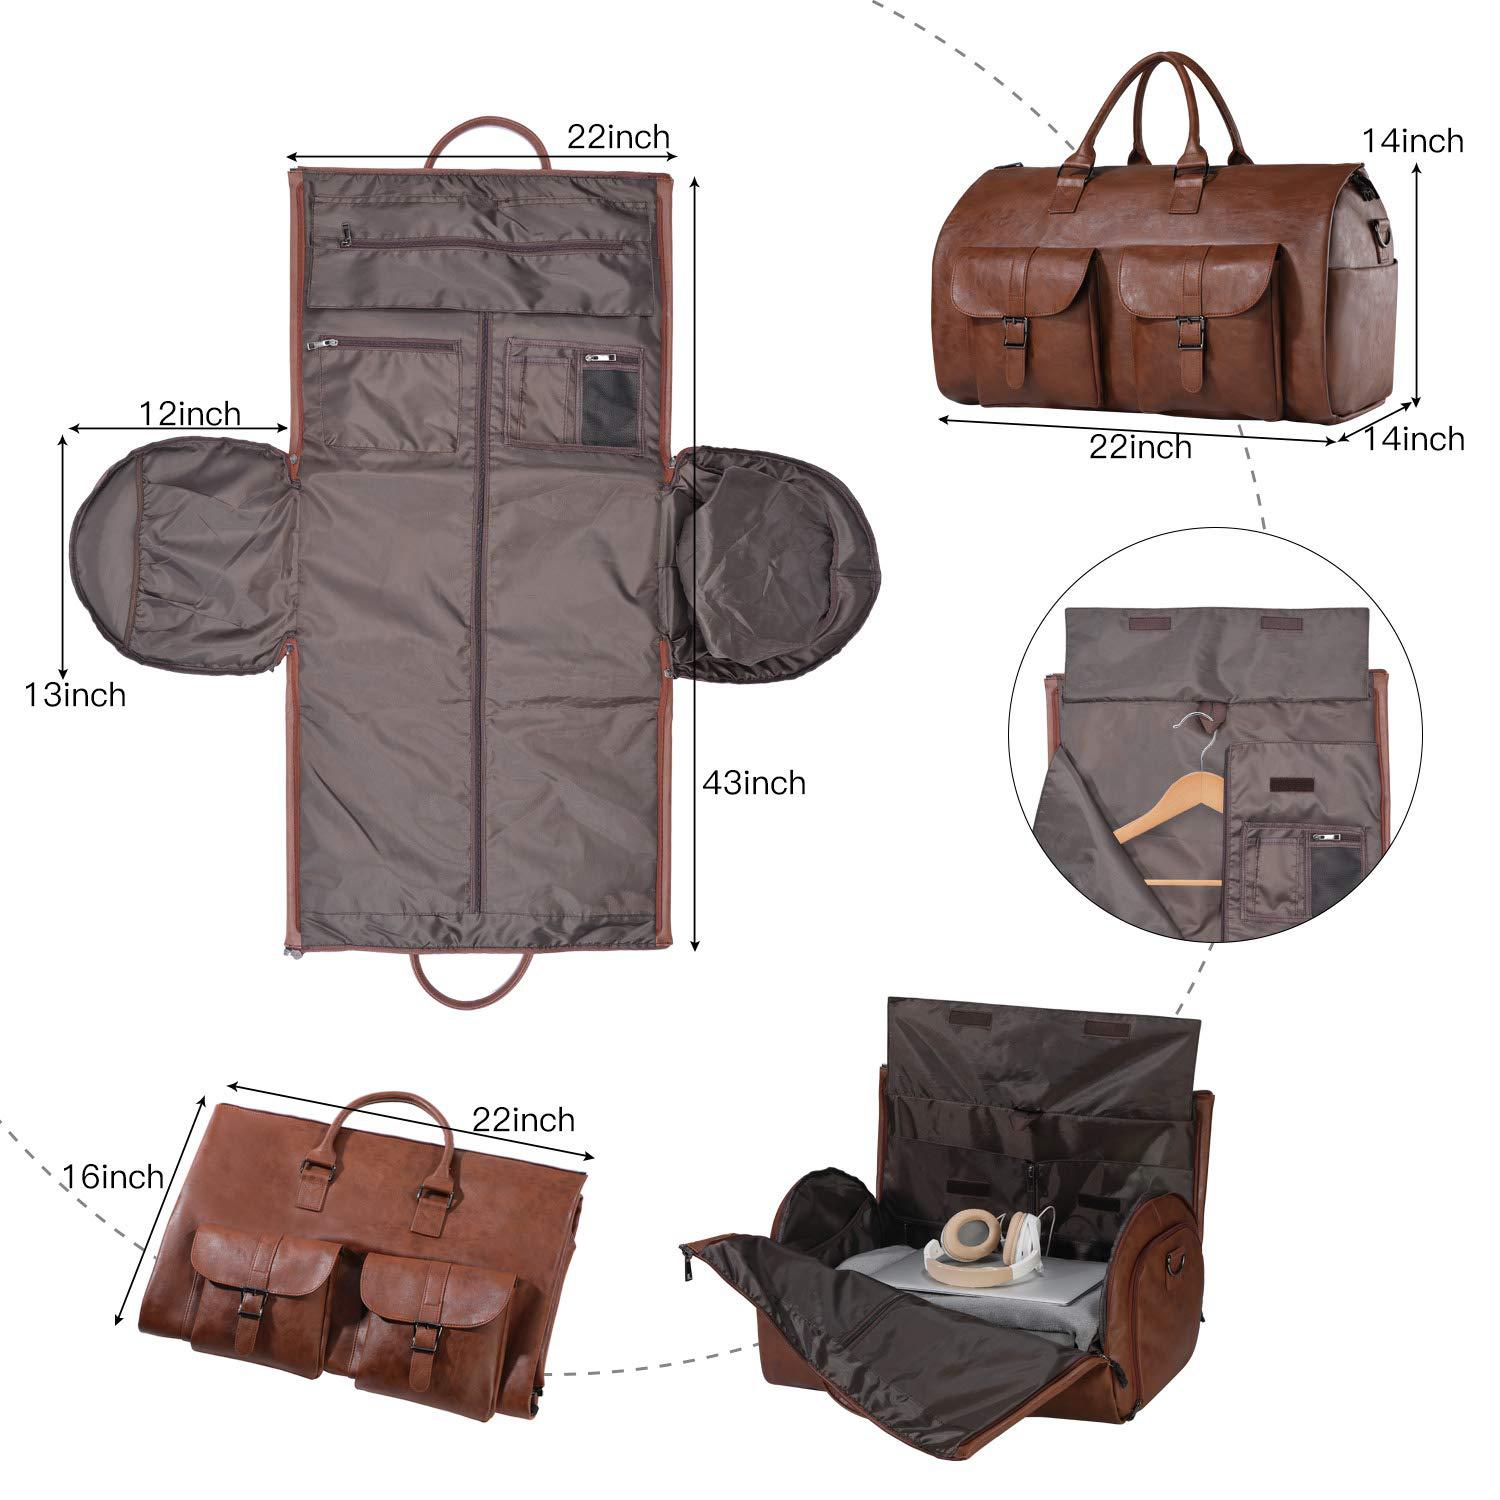 In stock new convertible travel bag clothing bag luggage bag 2 in 1 hanging handbag suit business travel bag